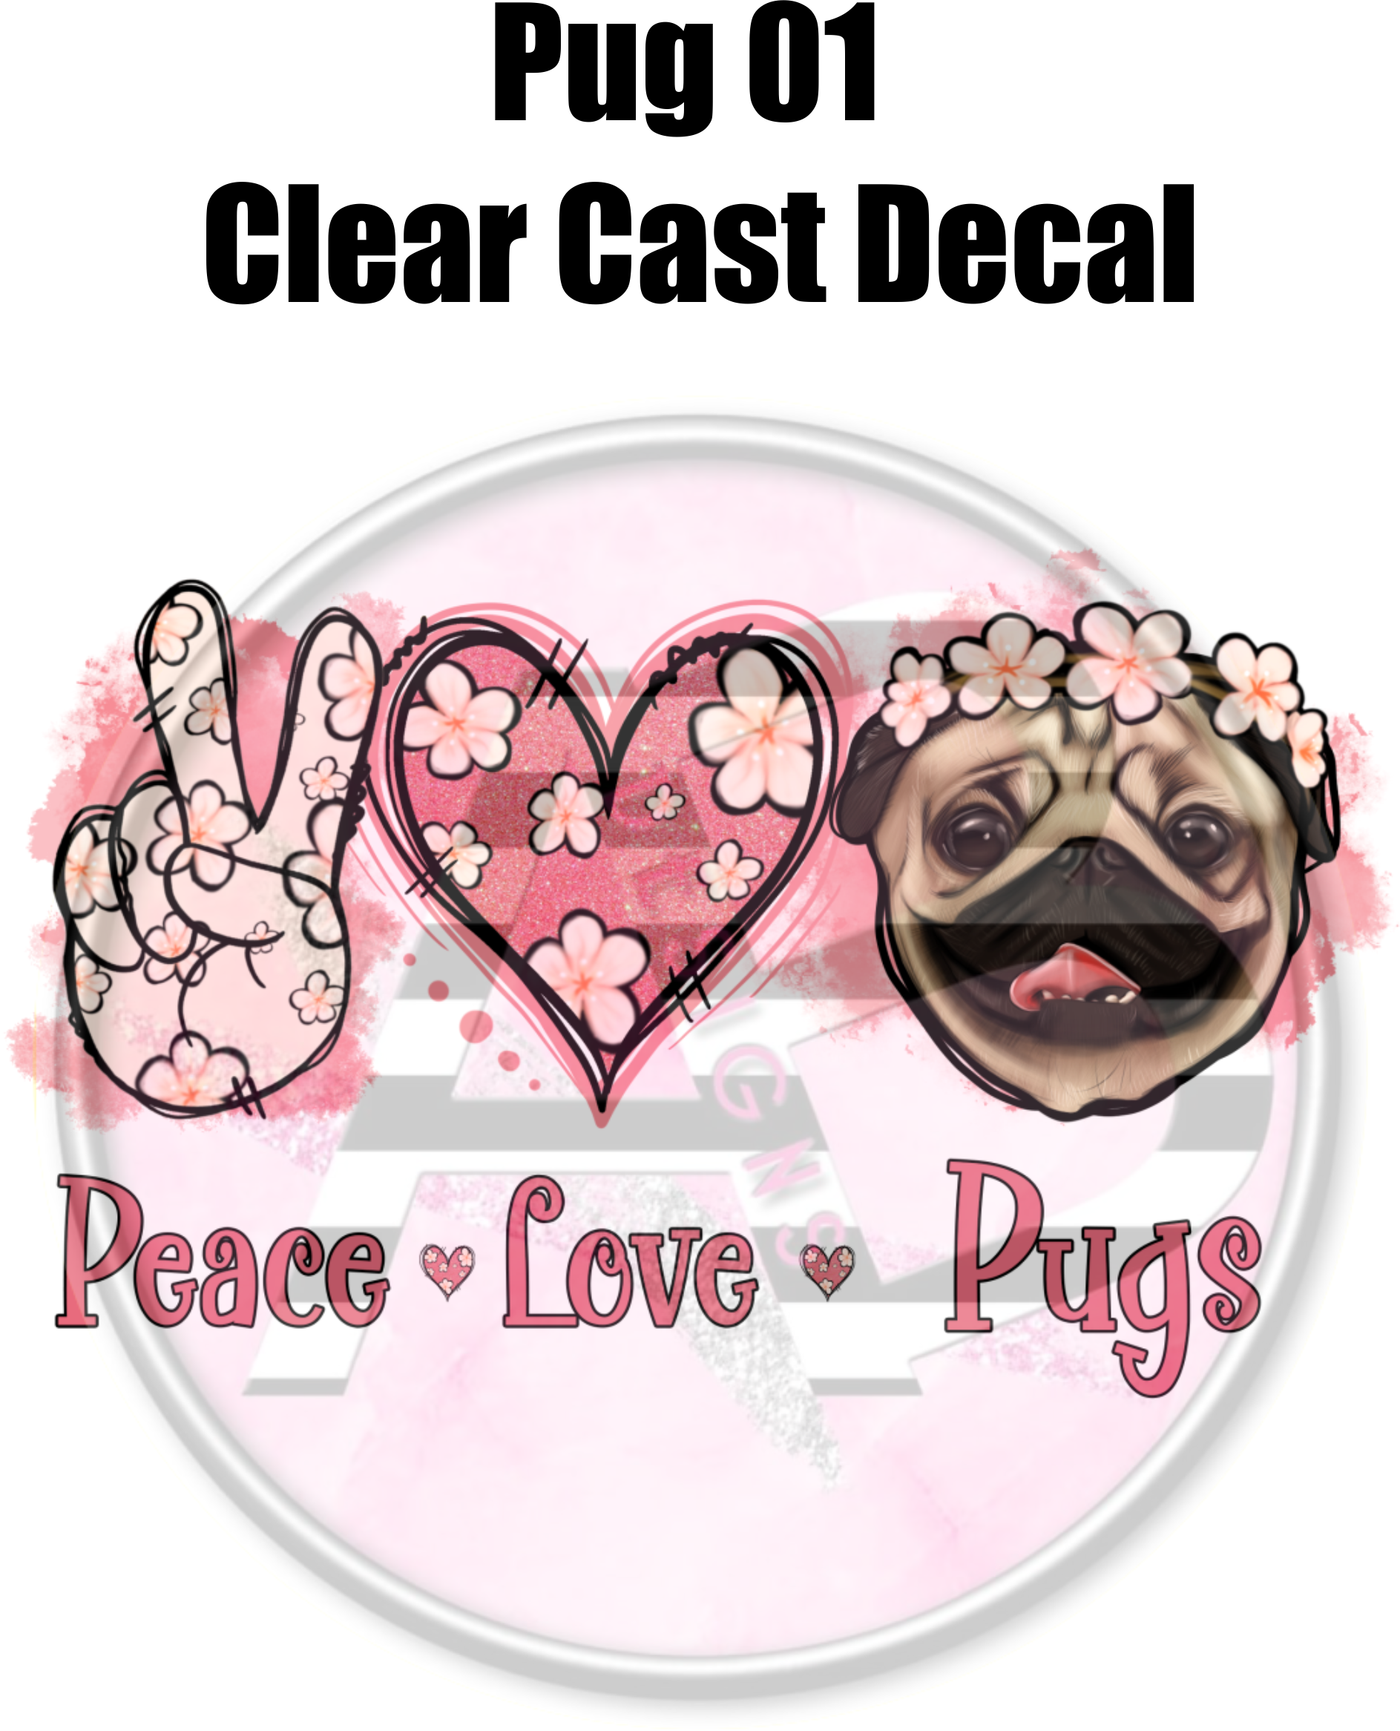 Pug 01 - Clear Cast Decal